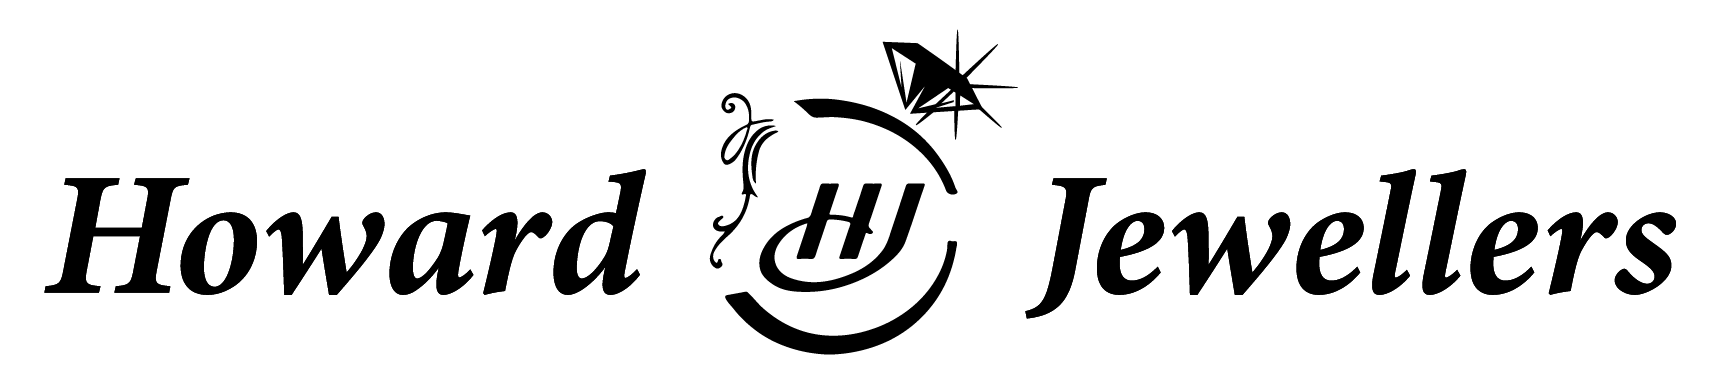 Howard Jewellers logo